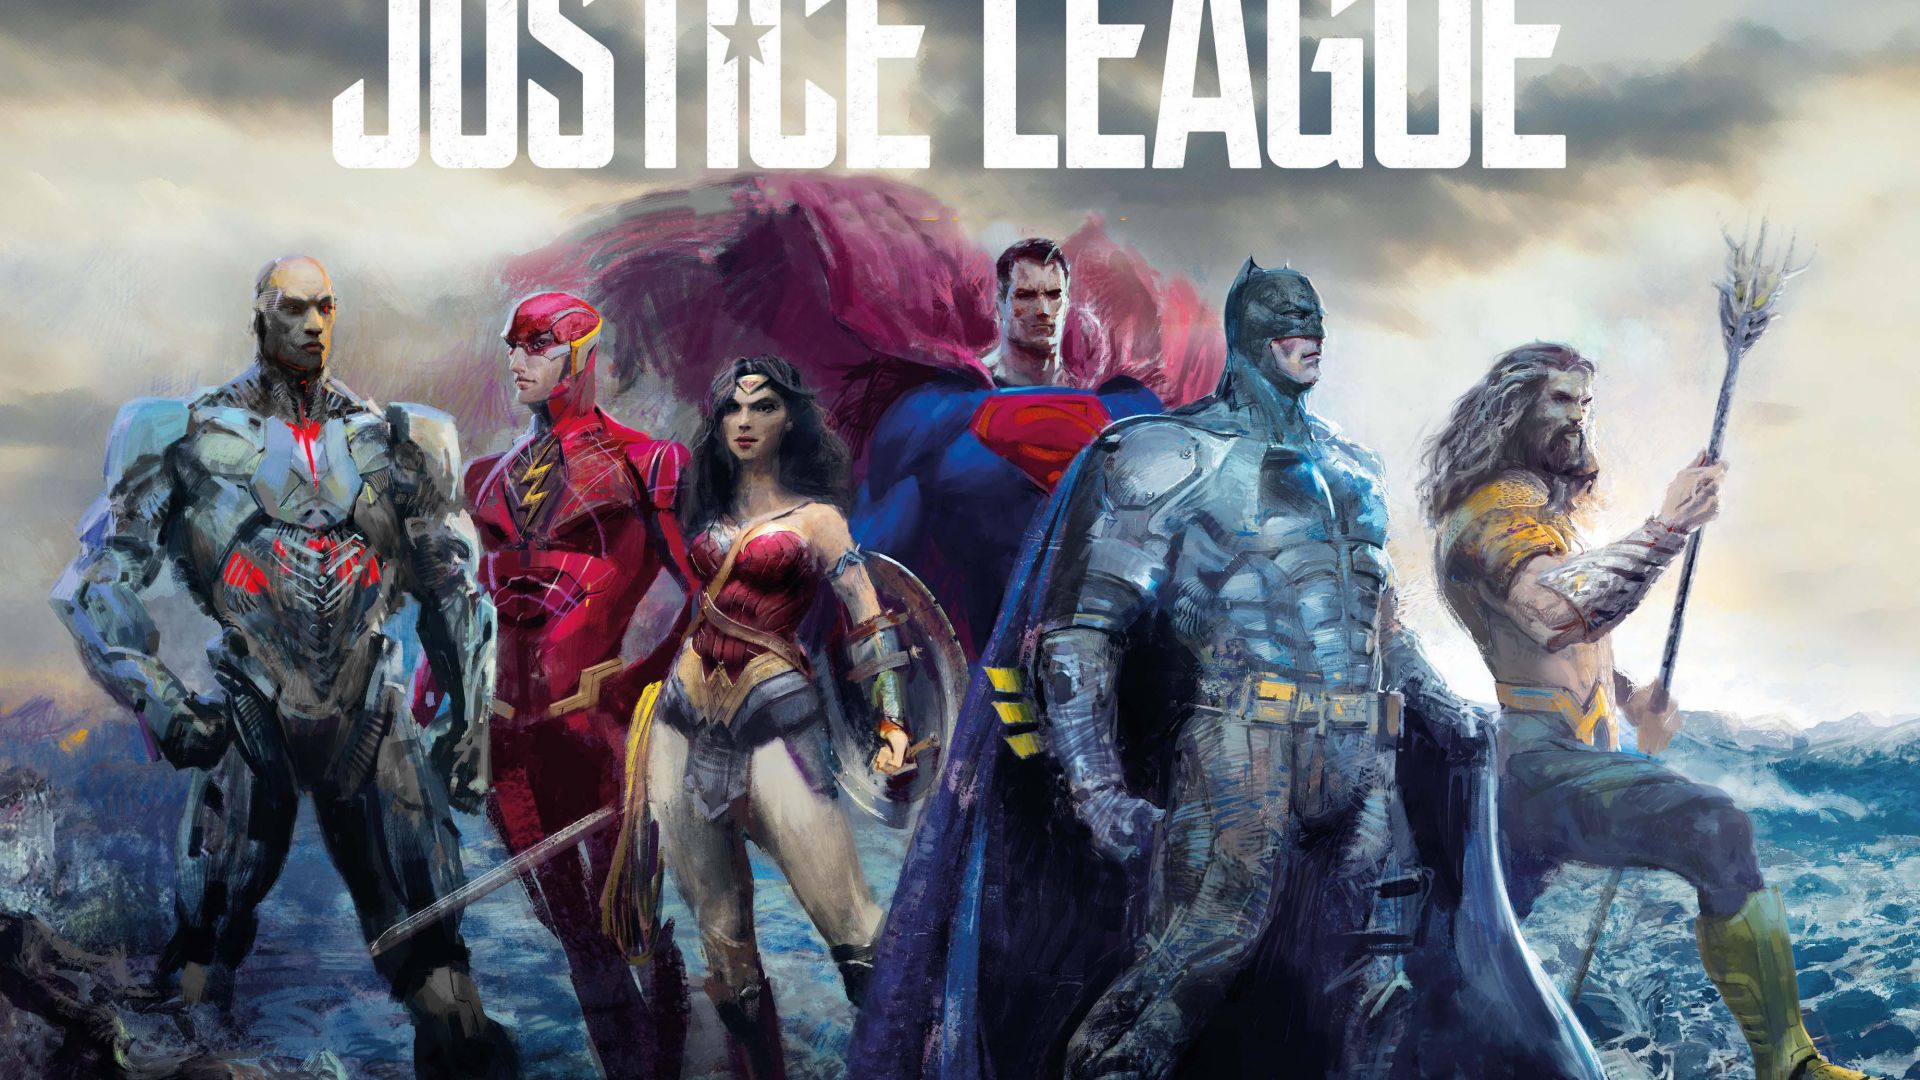 Desktop Wallpaper 4k, Movie, Justice League, Artwork, Superhero Team, Hd  Image, Picture, Background, Ea85a4